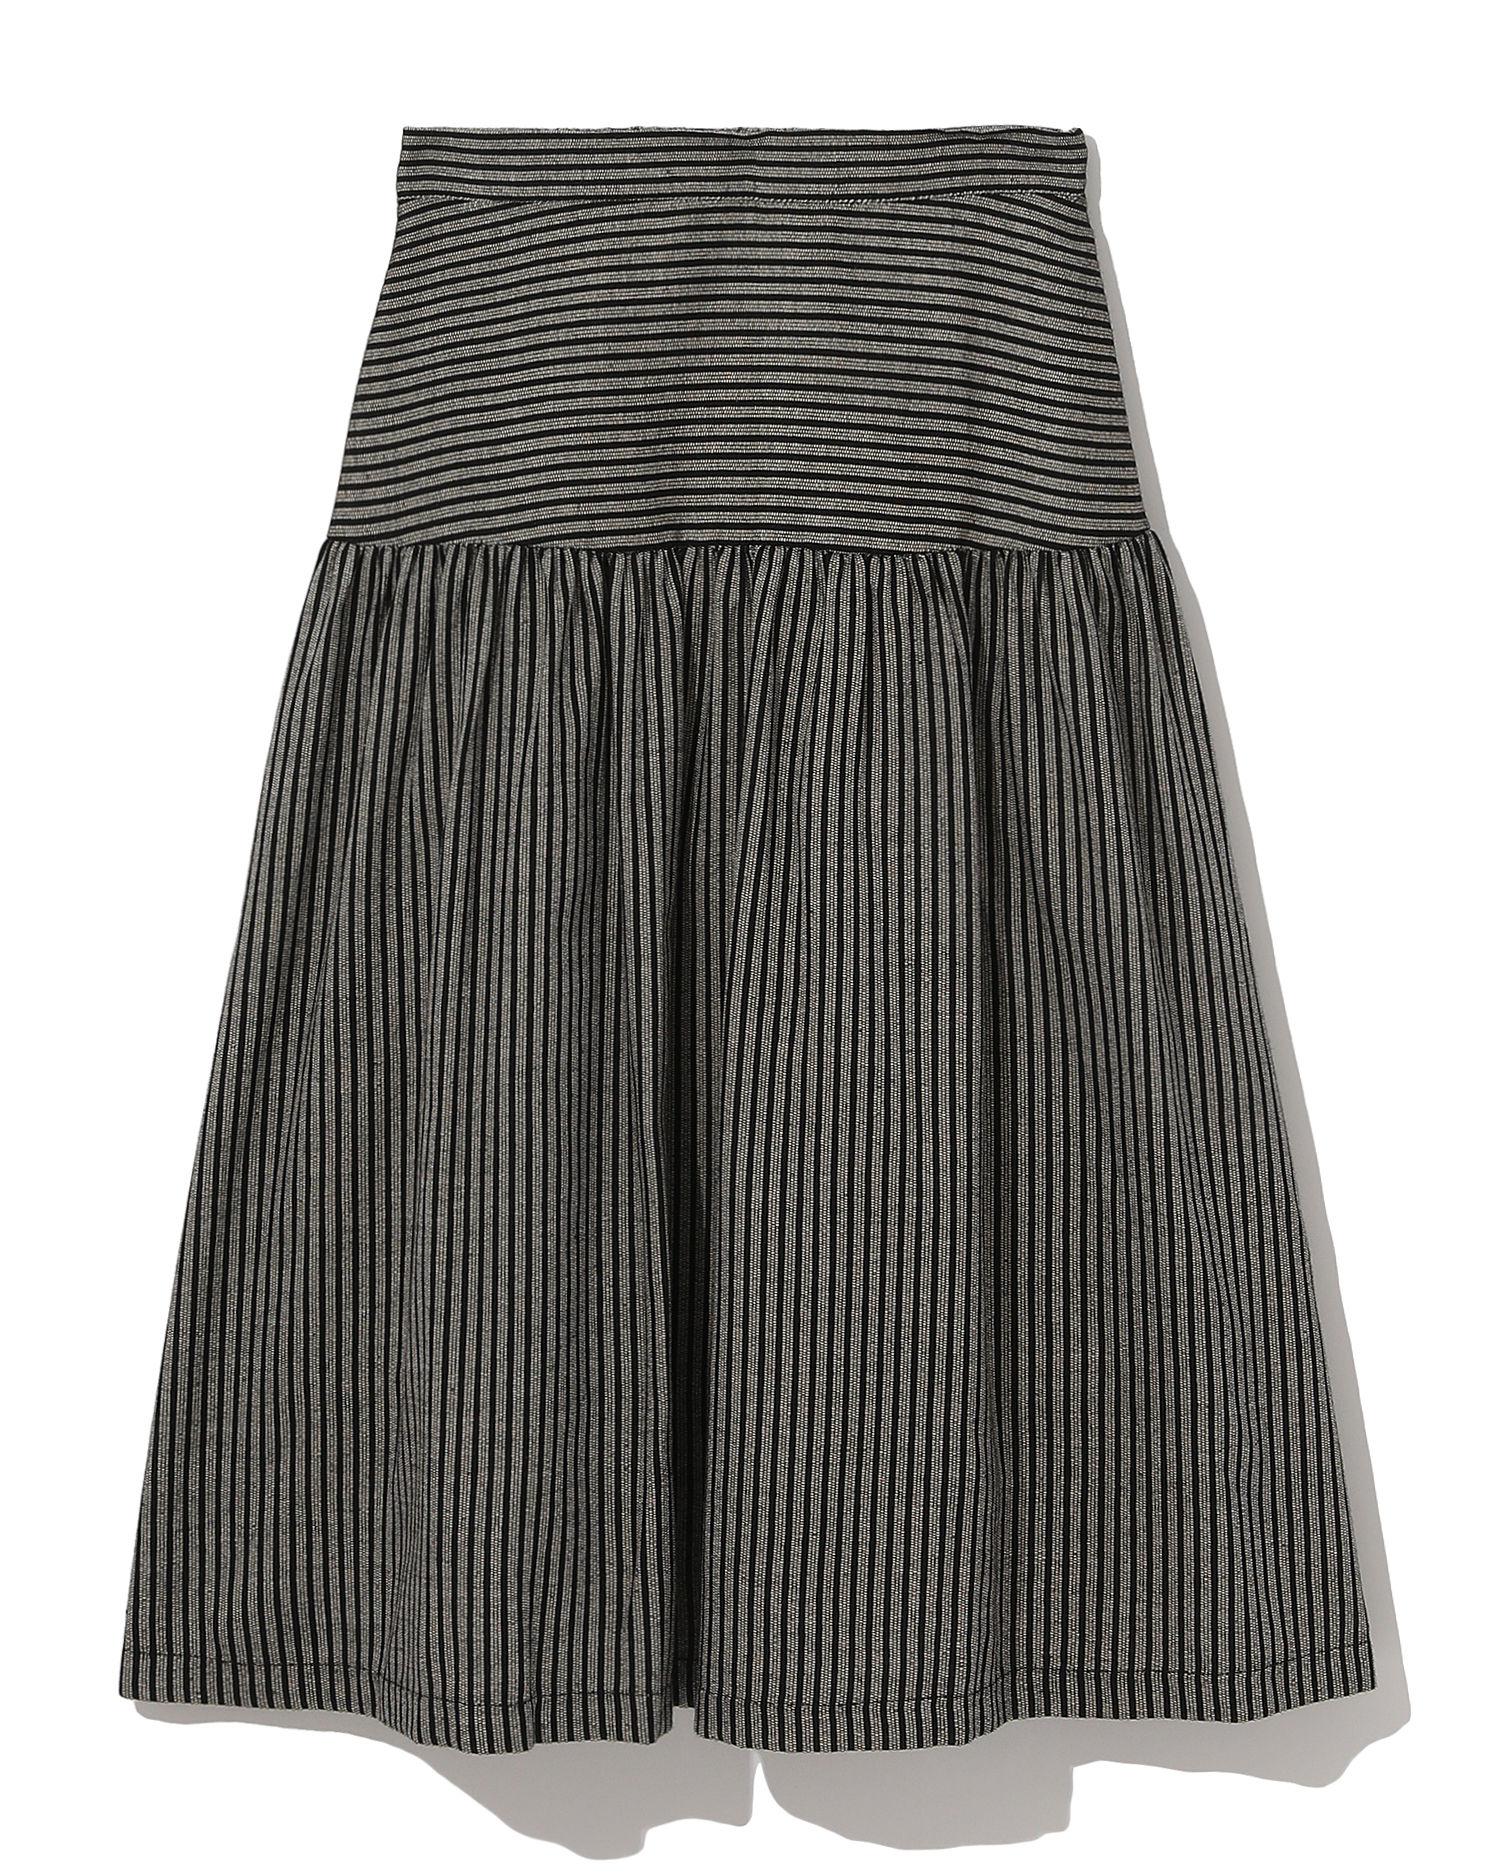 Panelled midi skirt by B+AB